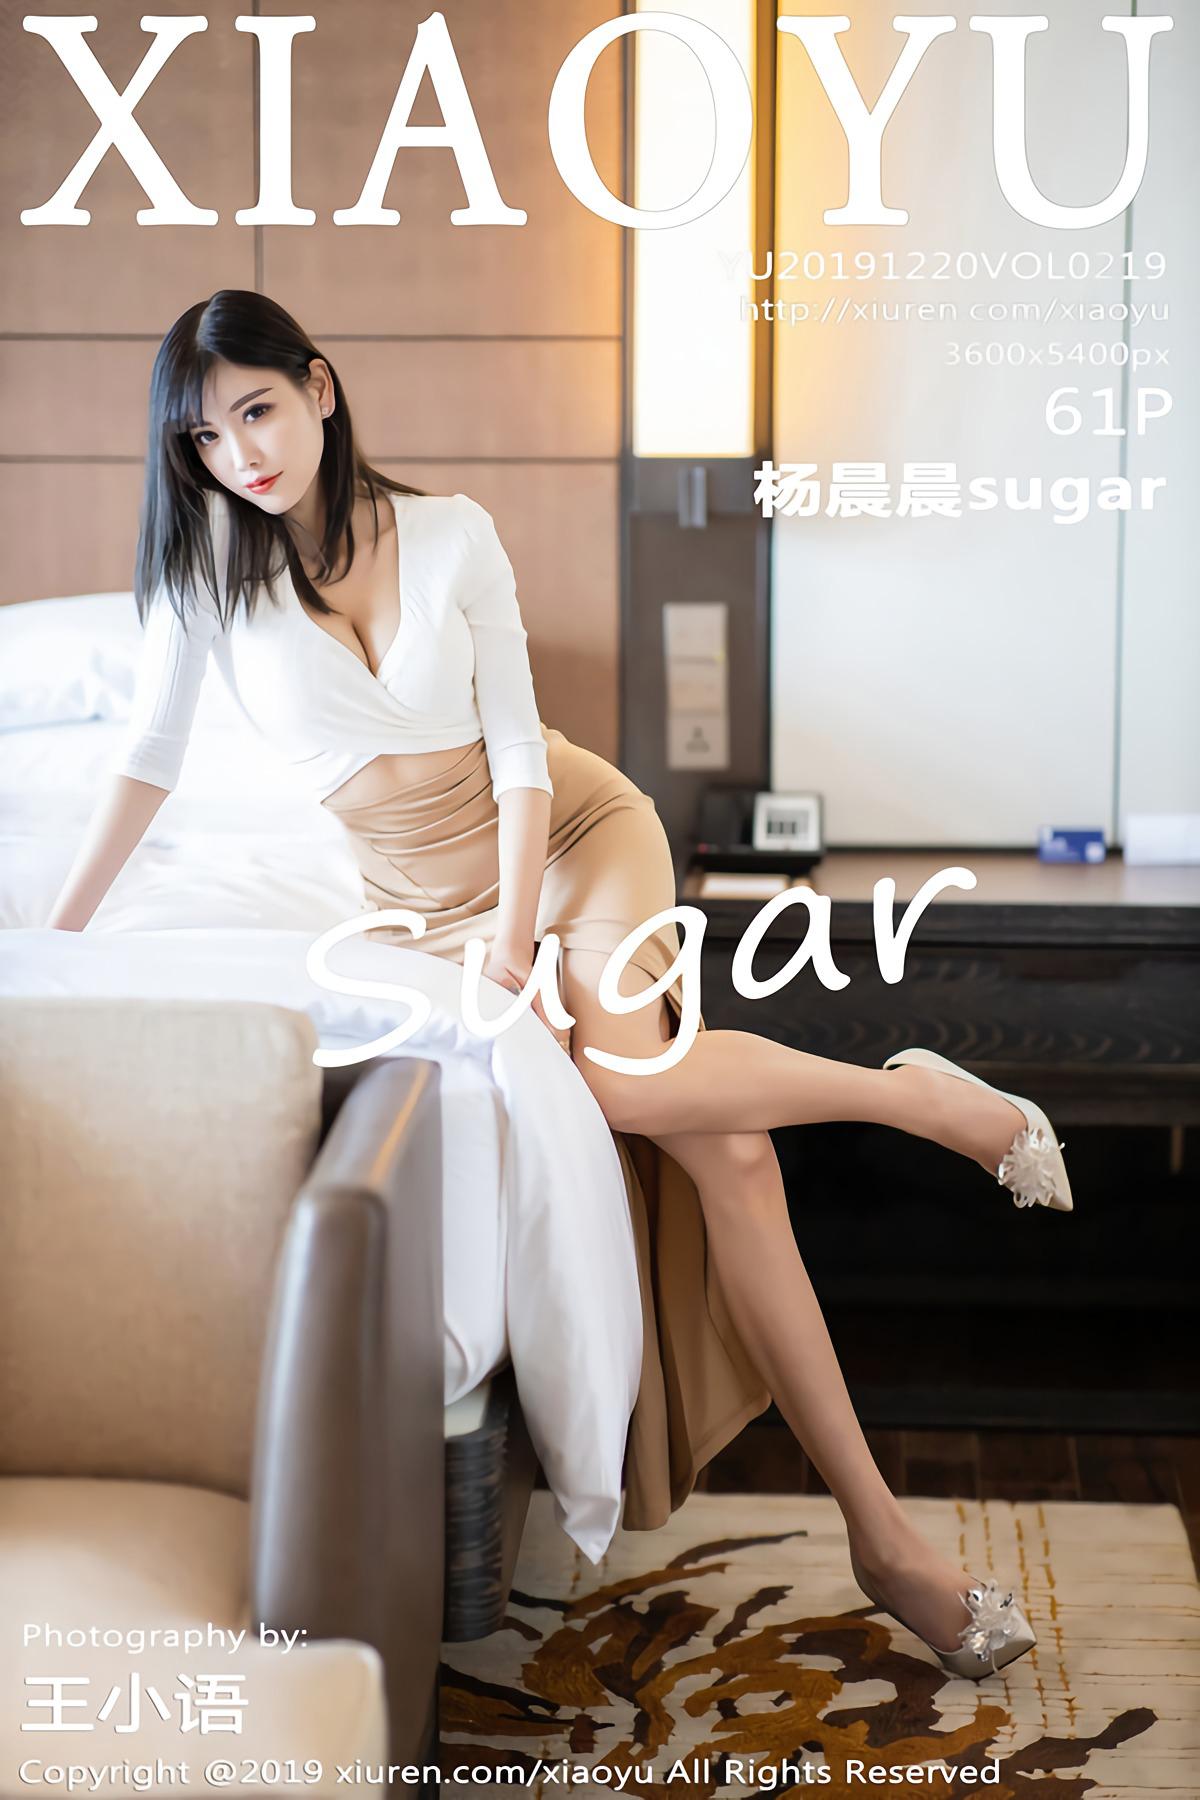 Xiaoyu 语画界 2019.12.20 VOL.219 杨晨晨sugar - 58.jpg